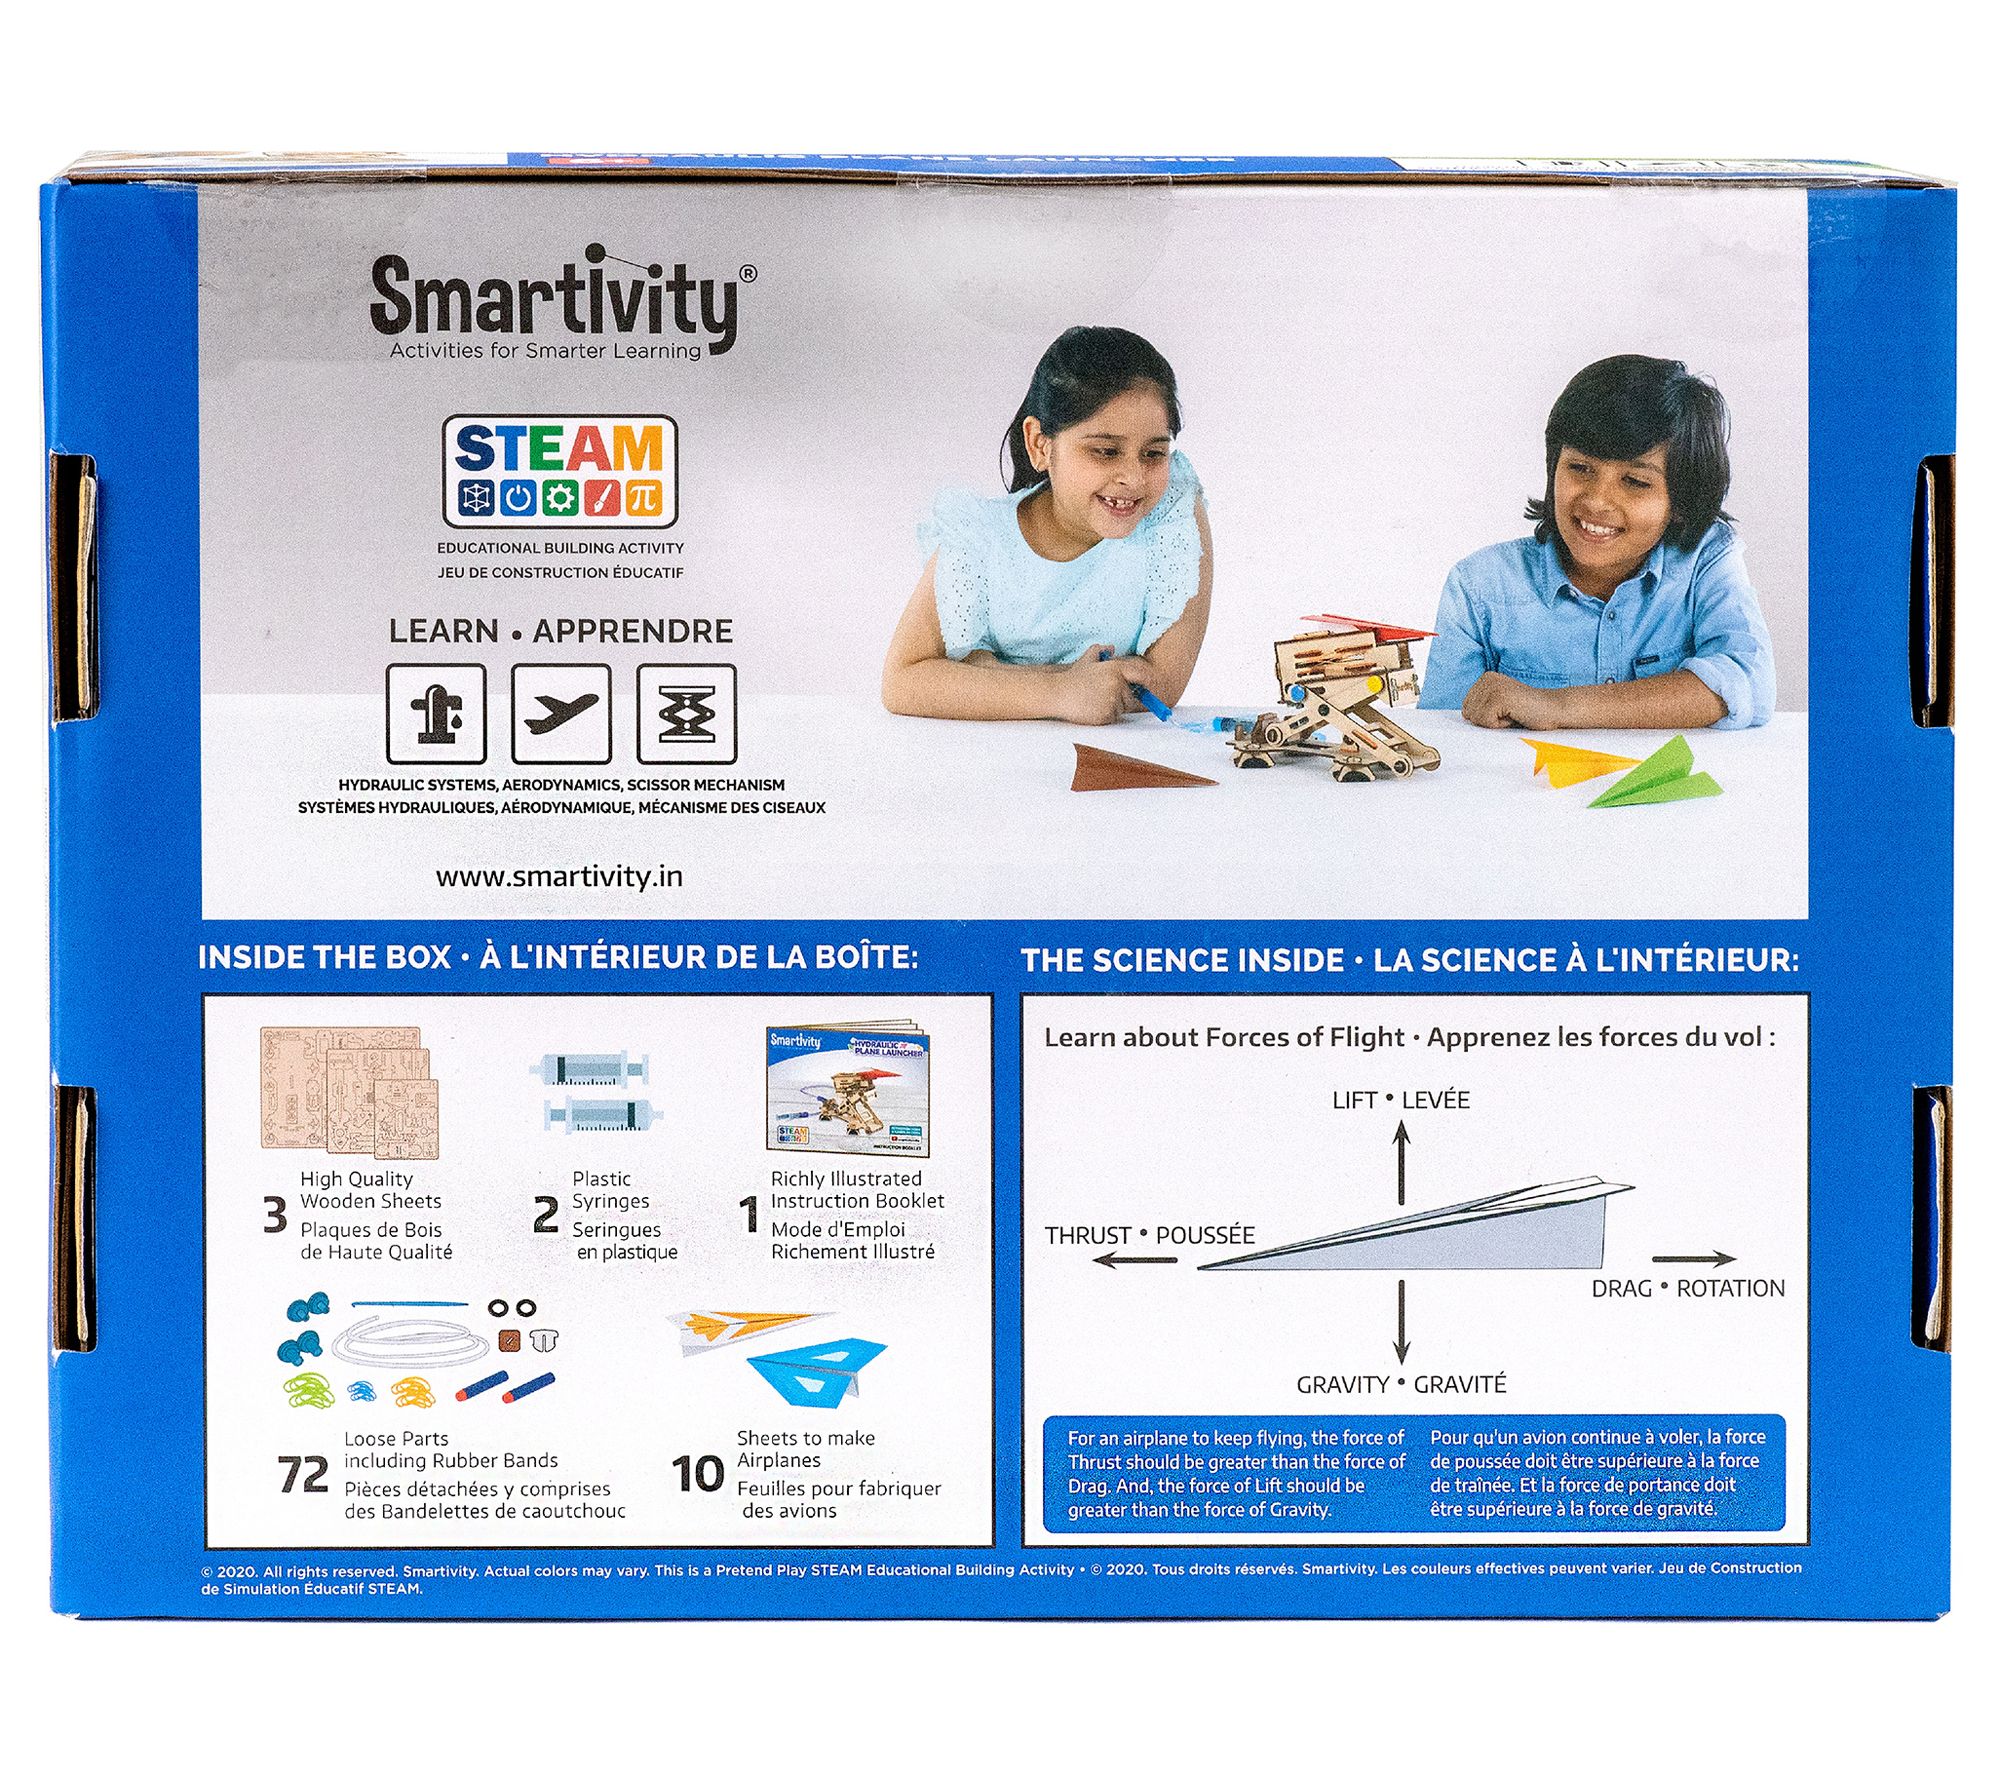 Elenco Smartivity DIY Toy Tabletop Pinball Machine 